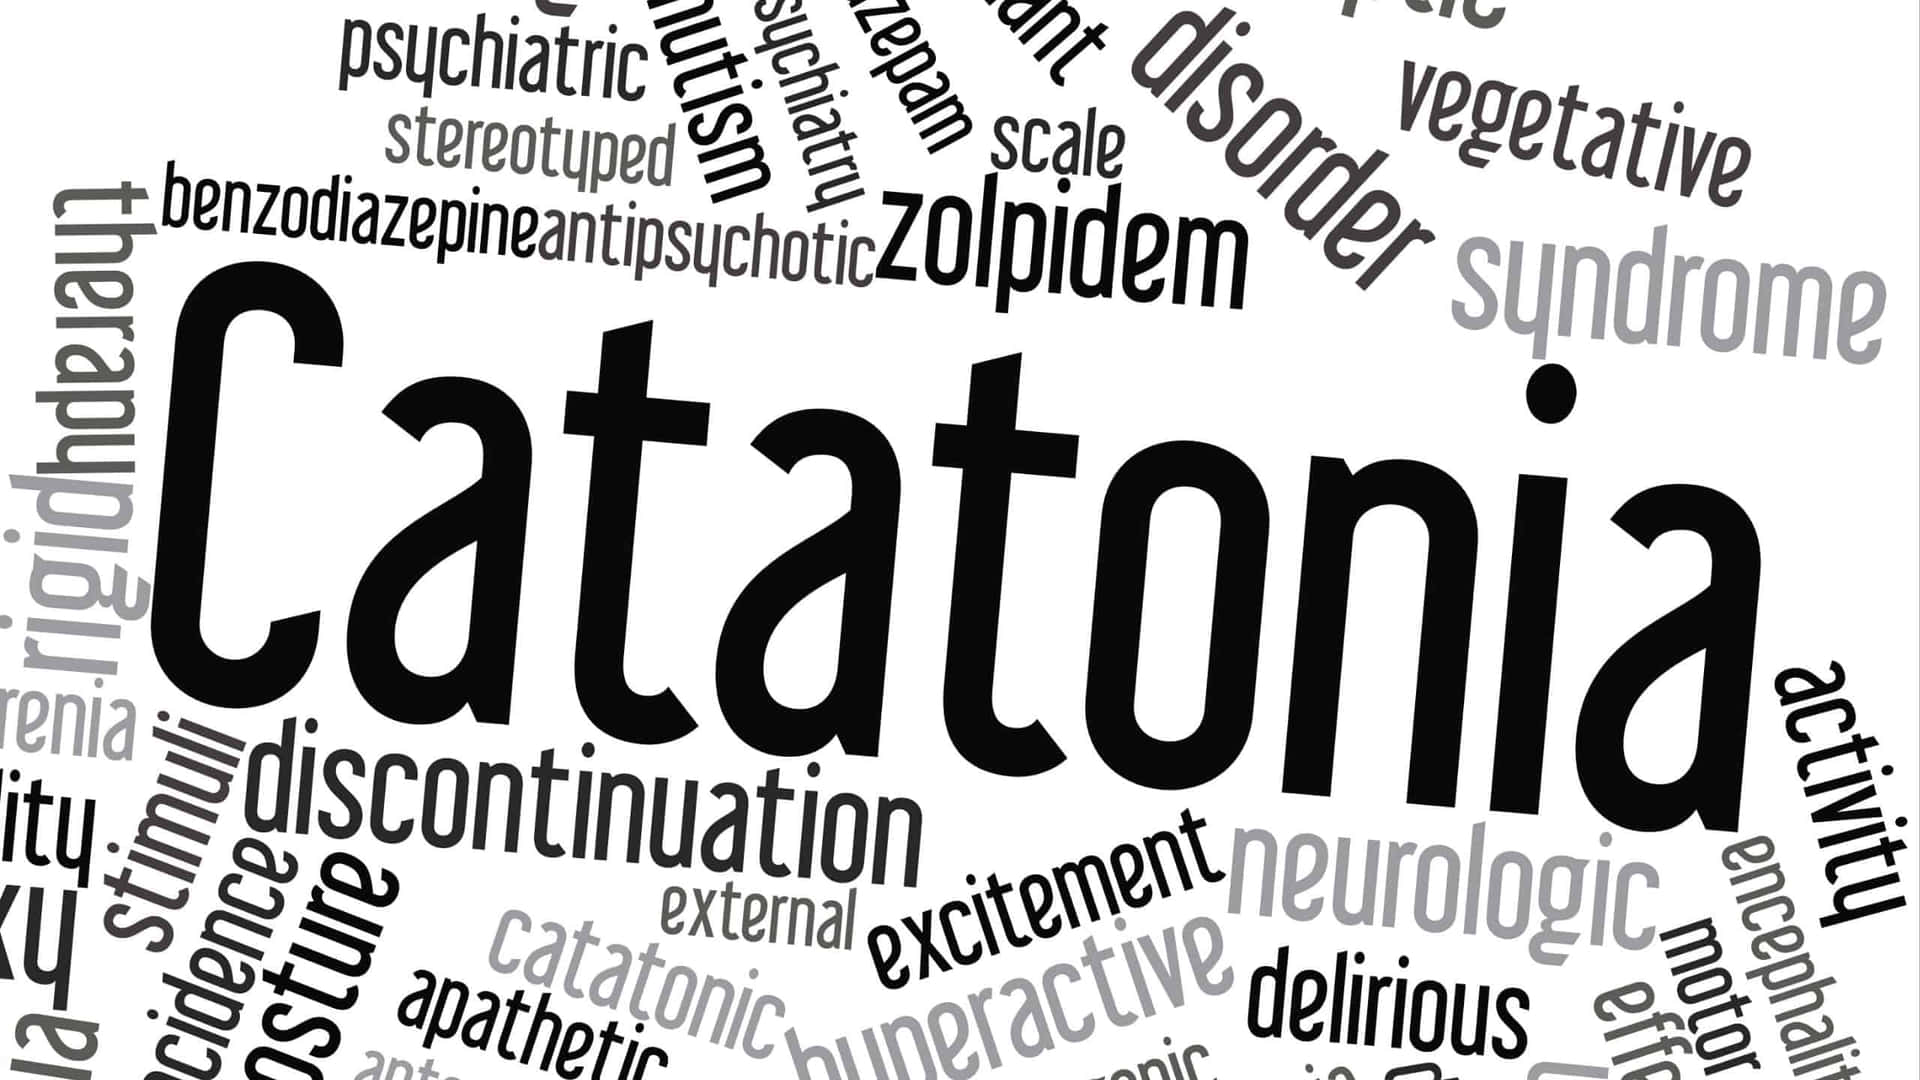 Catatonic In Catatonia Word Cloud Wallpaper